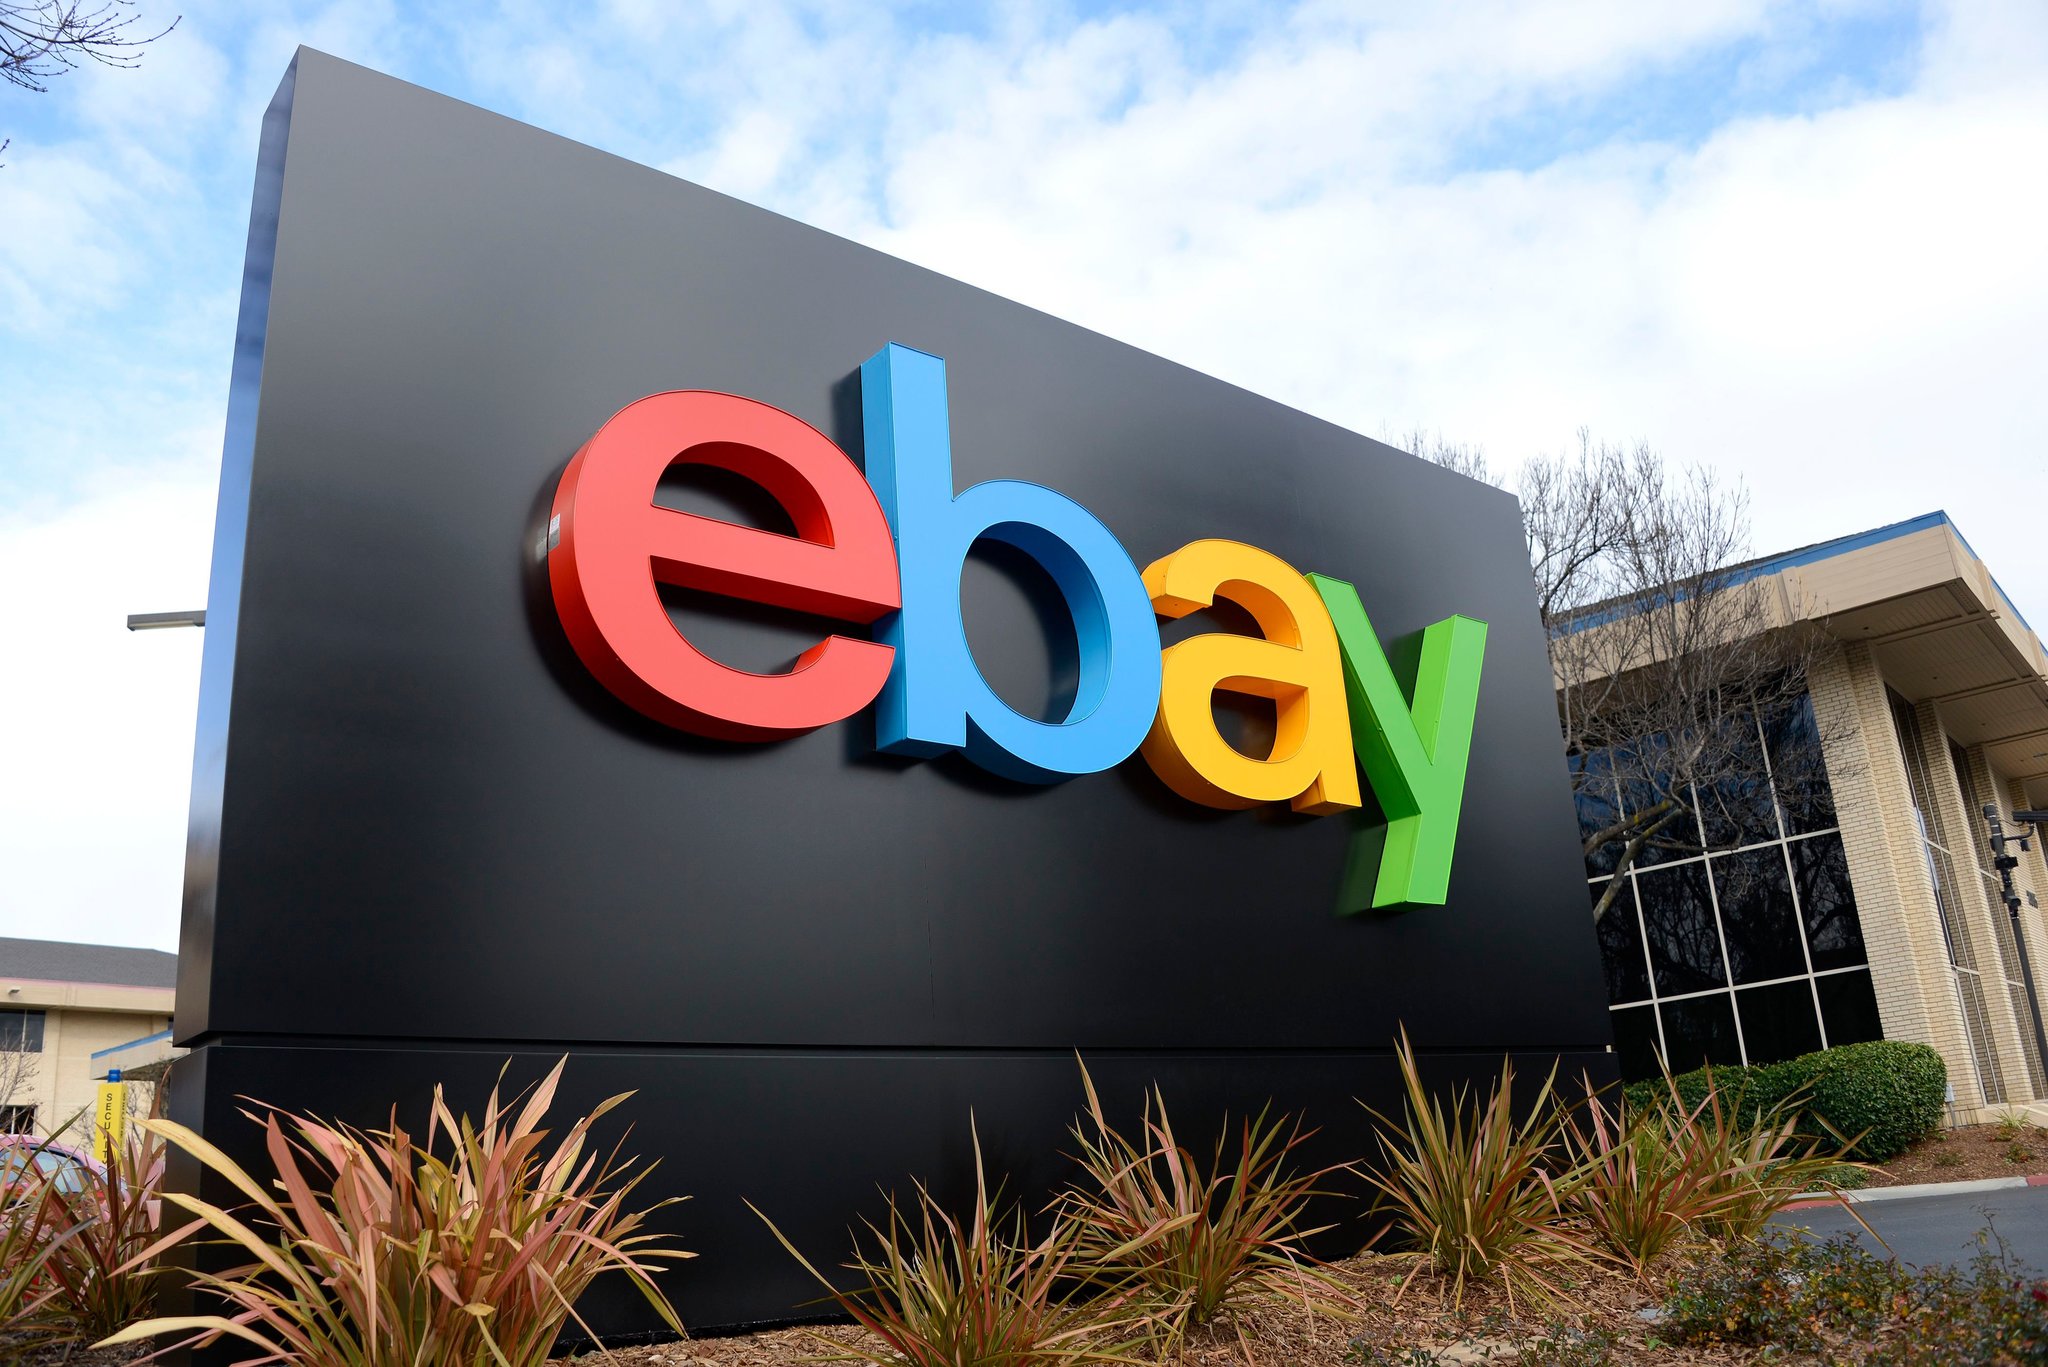 Historie a vznik eBay